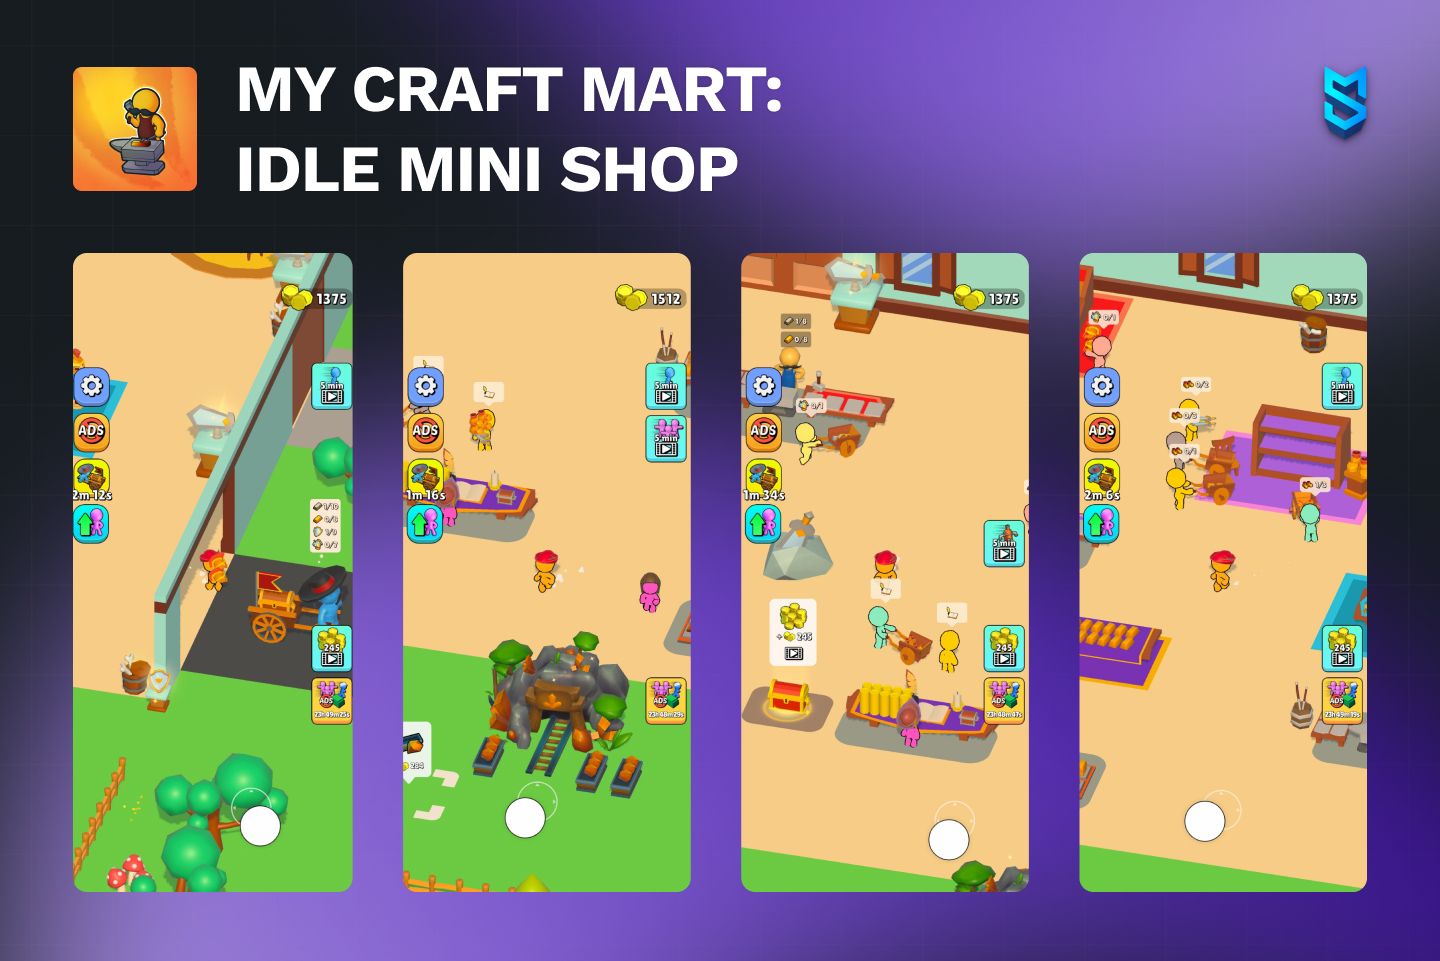 My Craft Mart: Idle Mini Shop